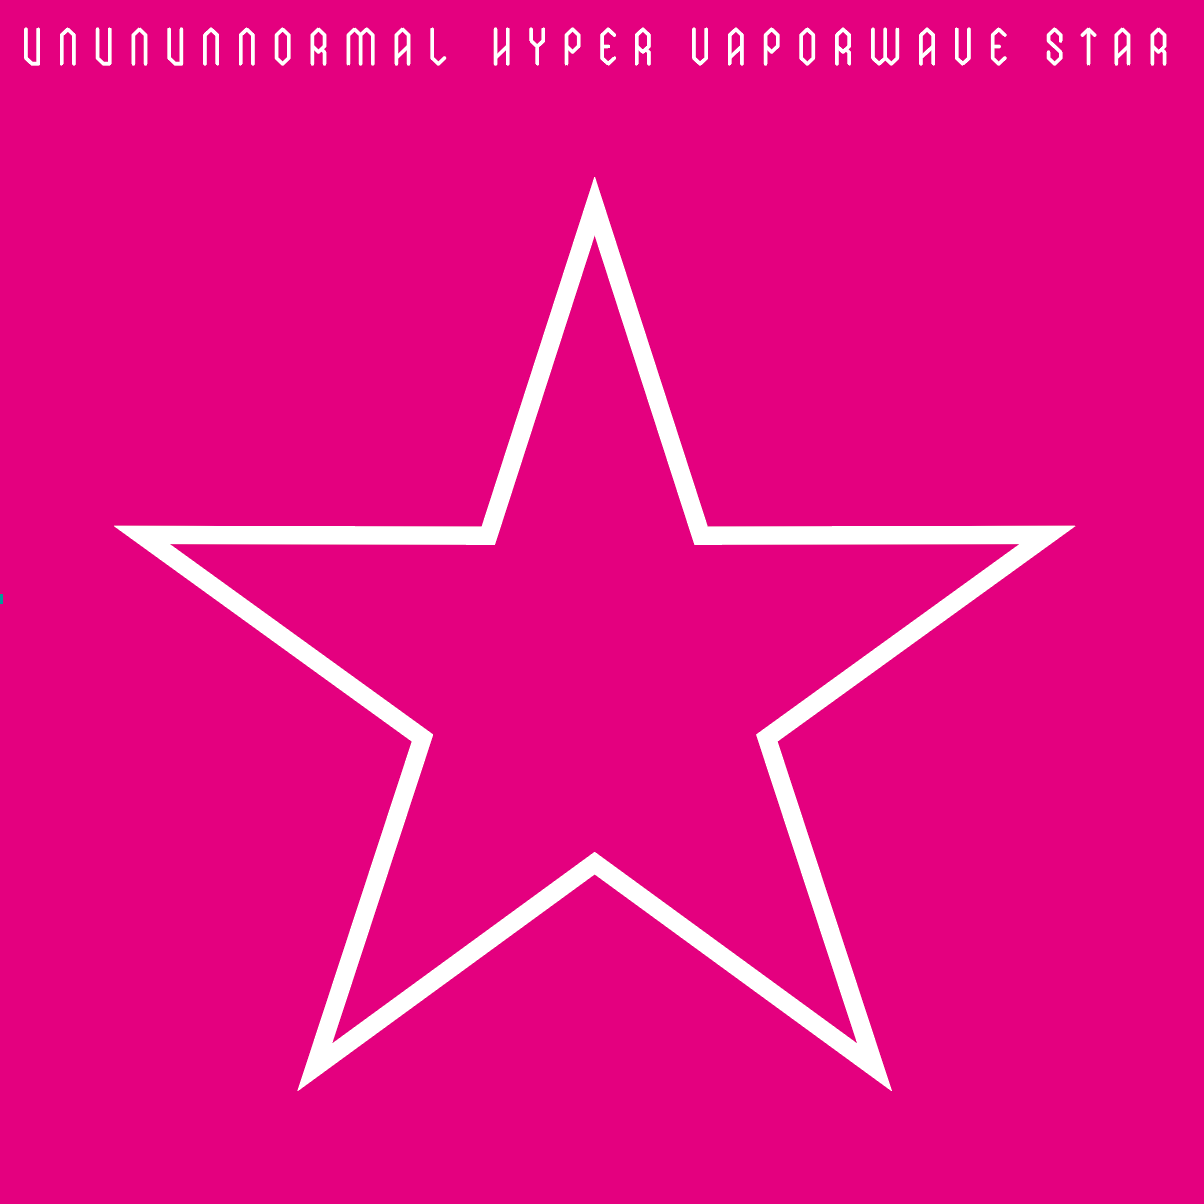 UNUNUNNORMAL / HYPER VAPORWAVE STAR